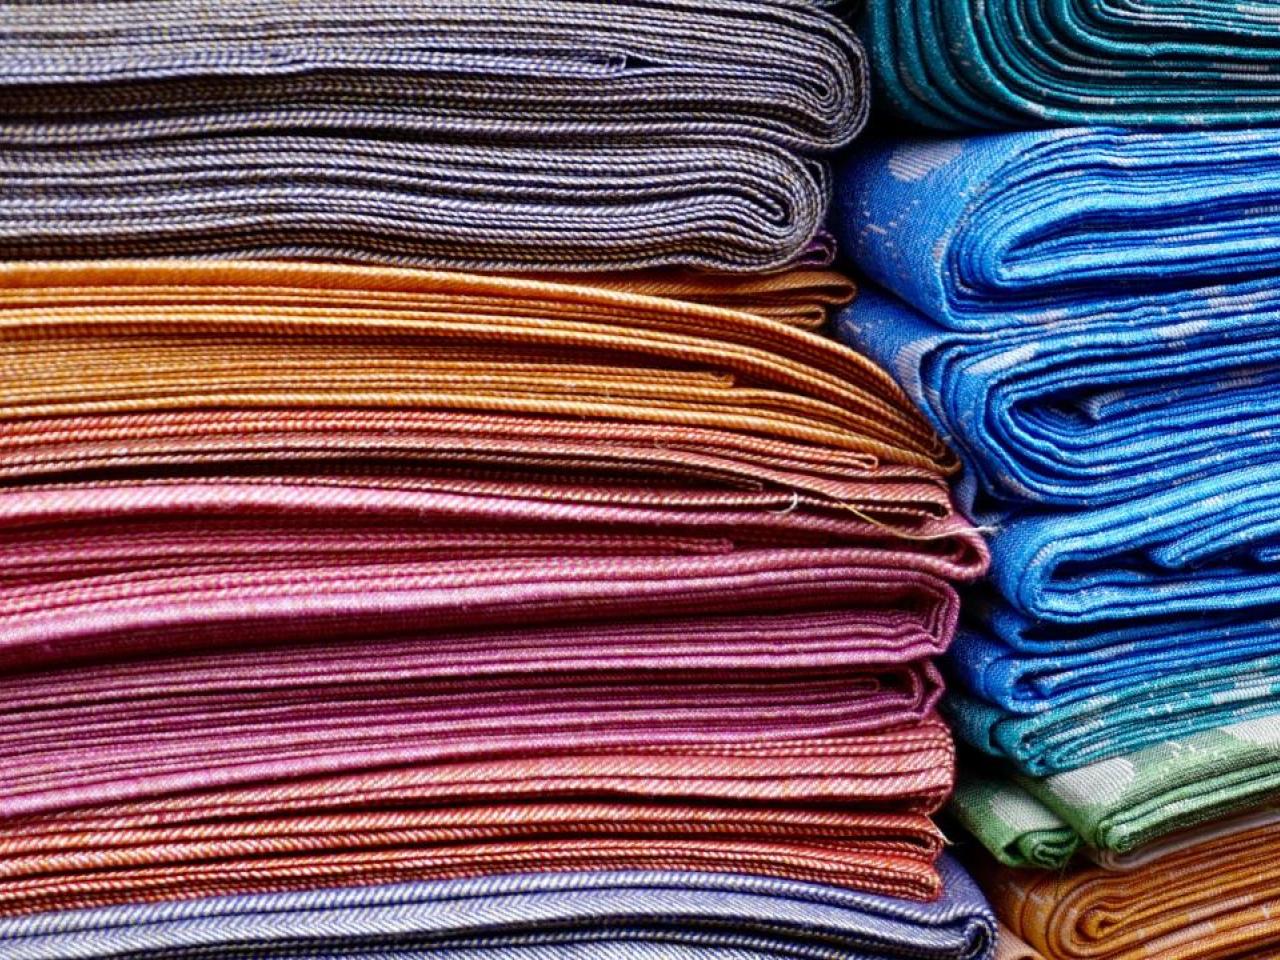 Colourful textiles and fabrics